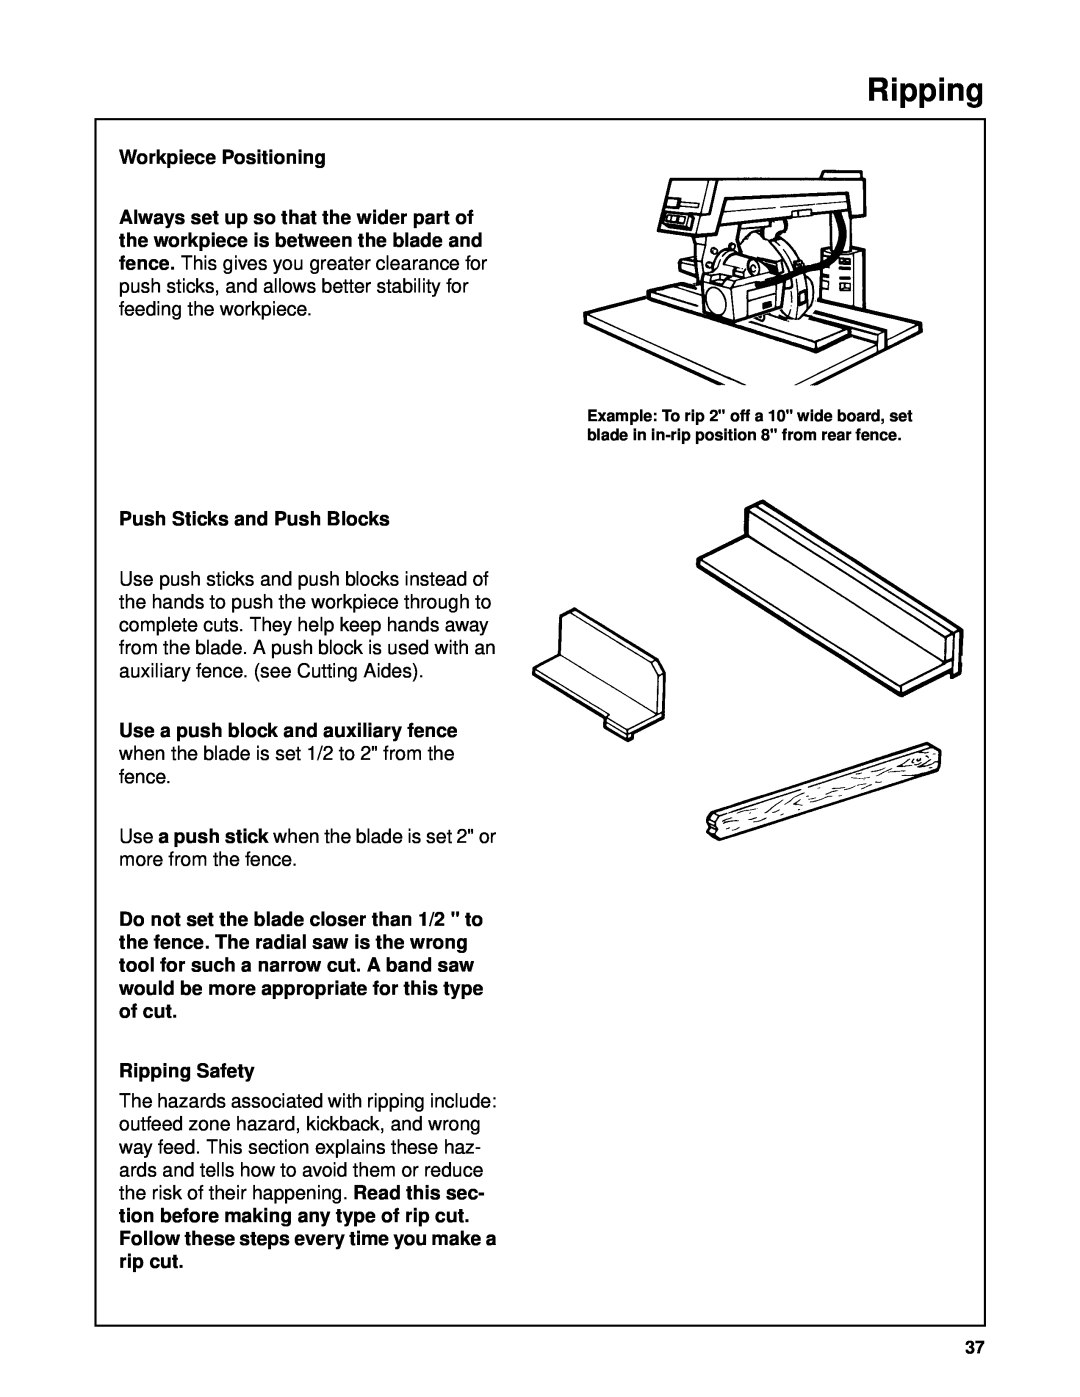 Craftsman 509398, 509399 owner manual Workpiece Positioning, Push Sticks and Push Blocks, Ripping Safety 